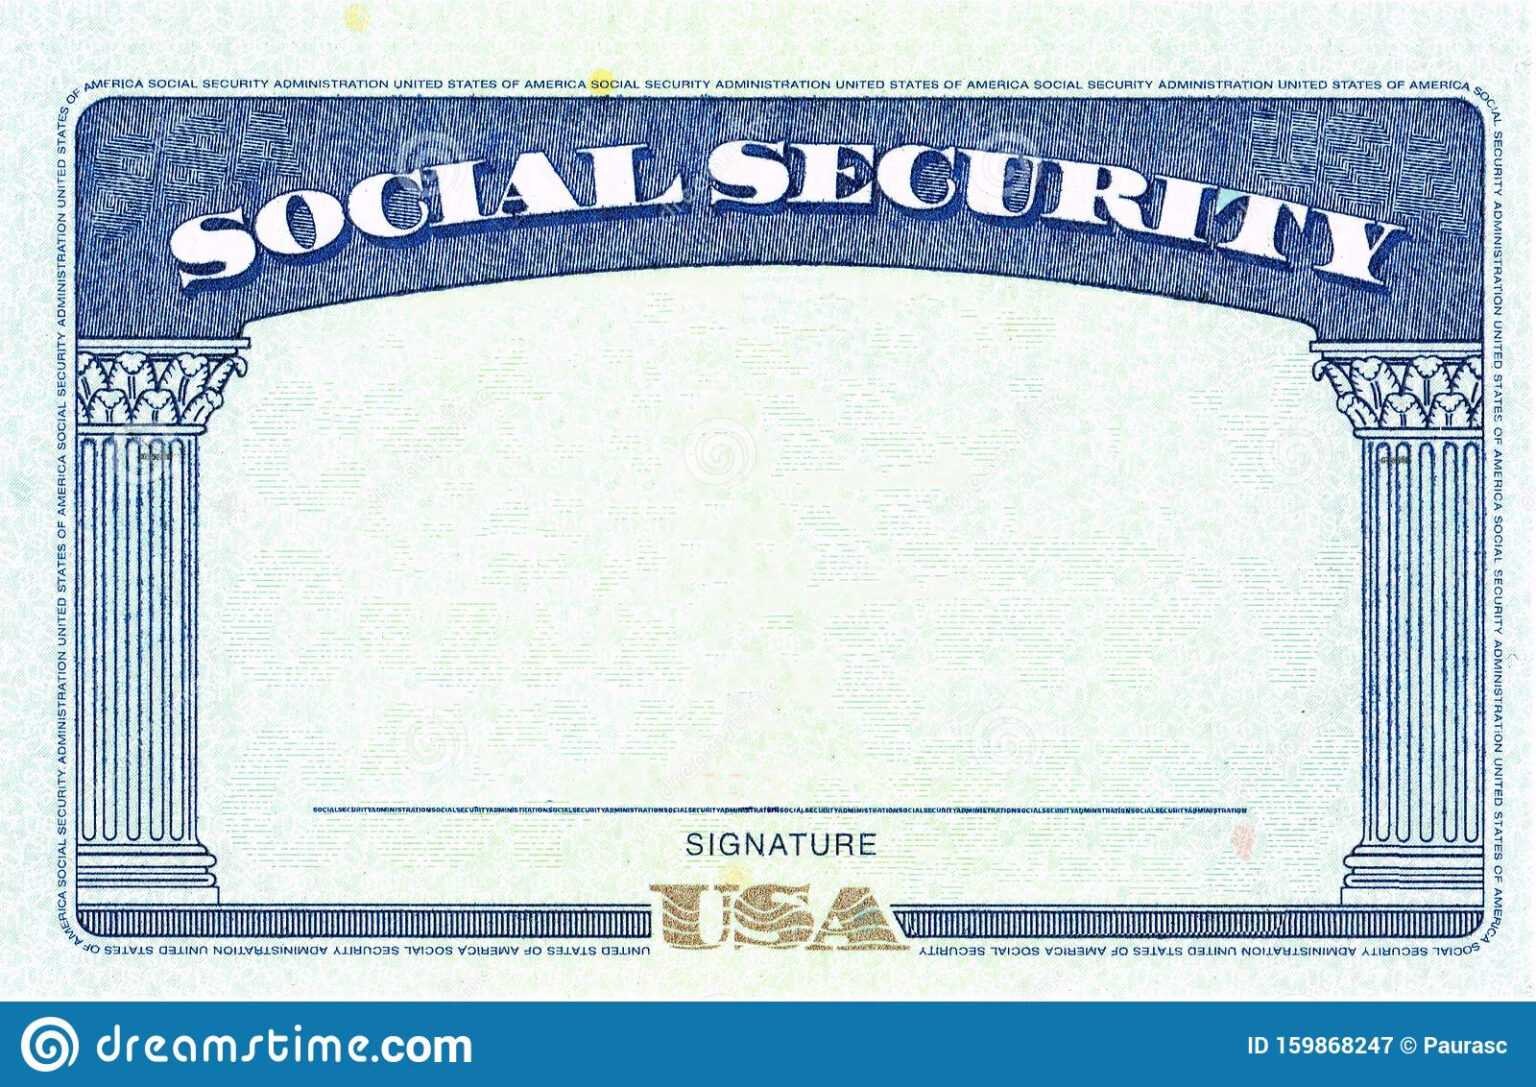 Social Security Card Blank Stock Image. Image Of Emigration regarding